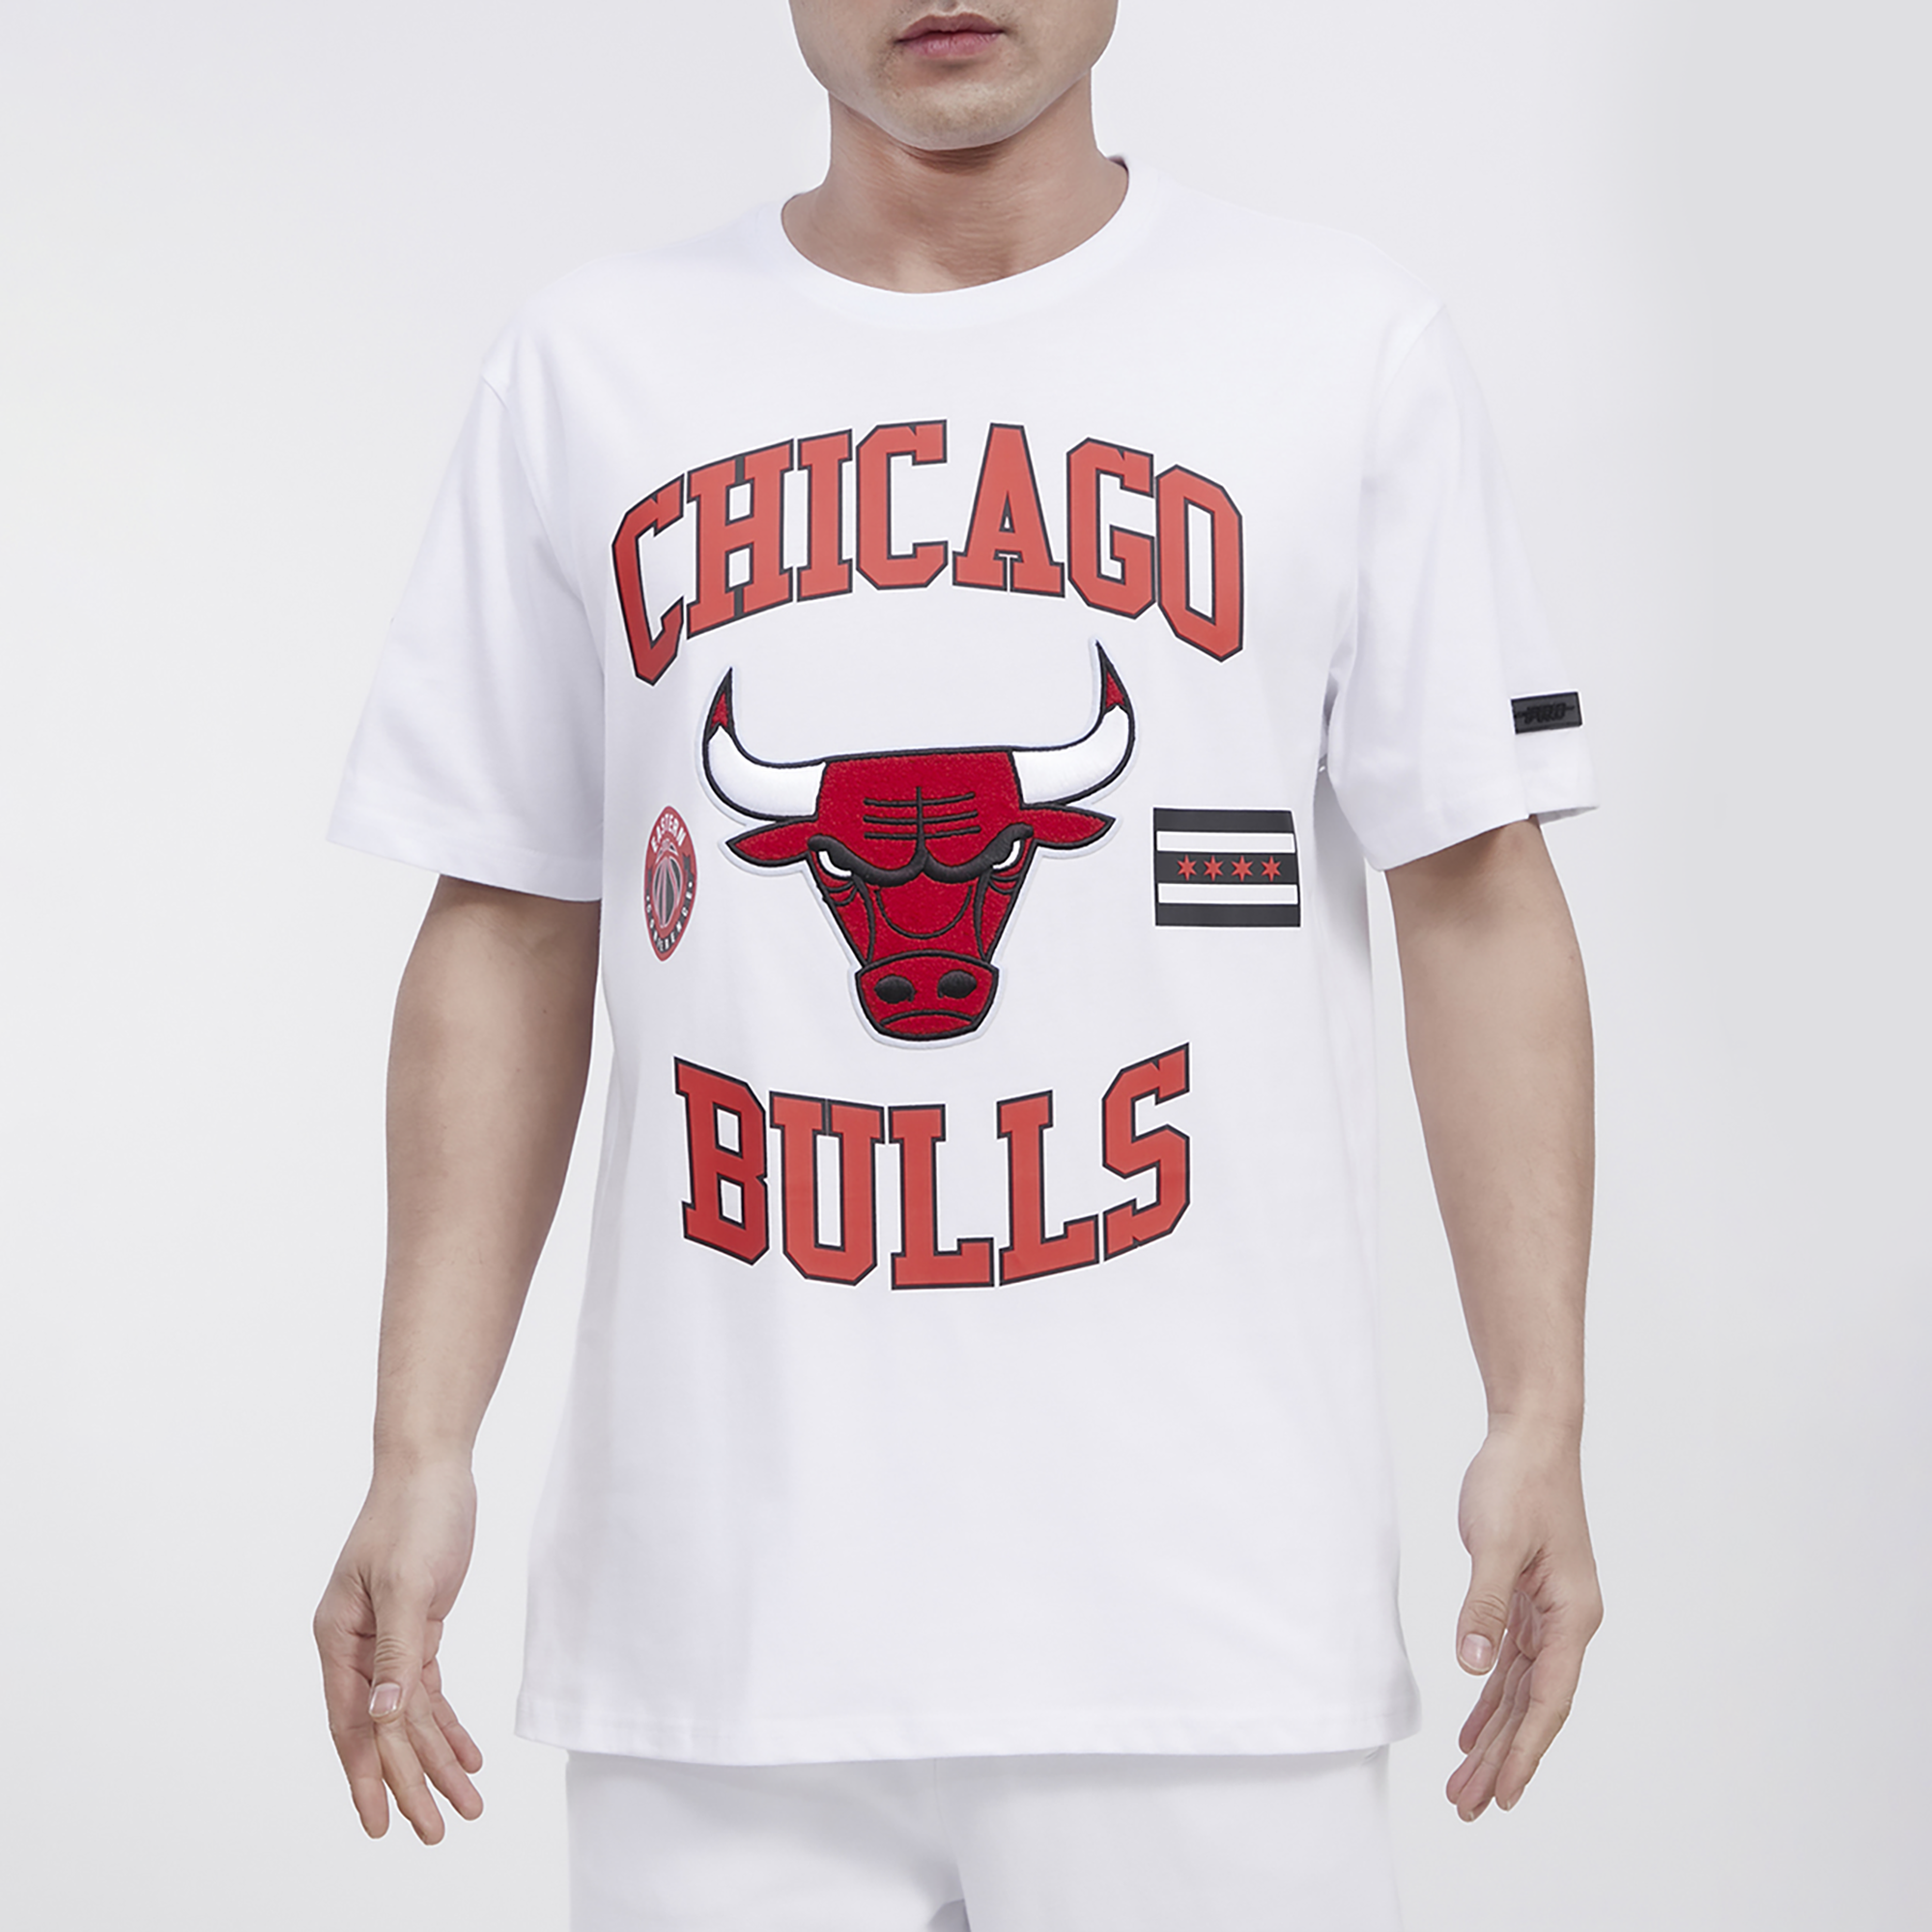 white bulls t shirt